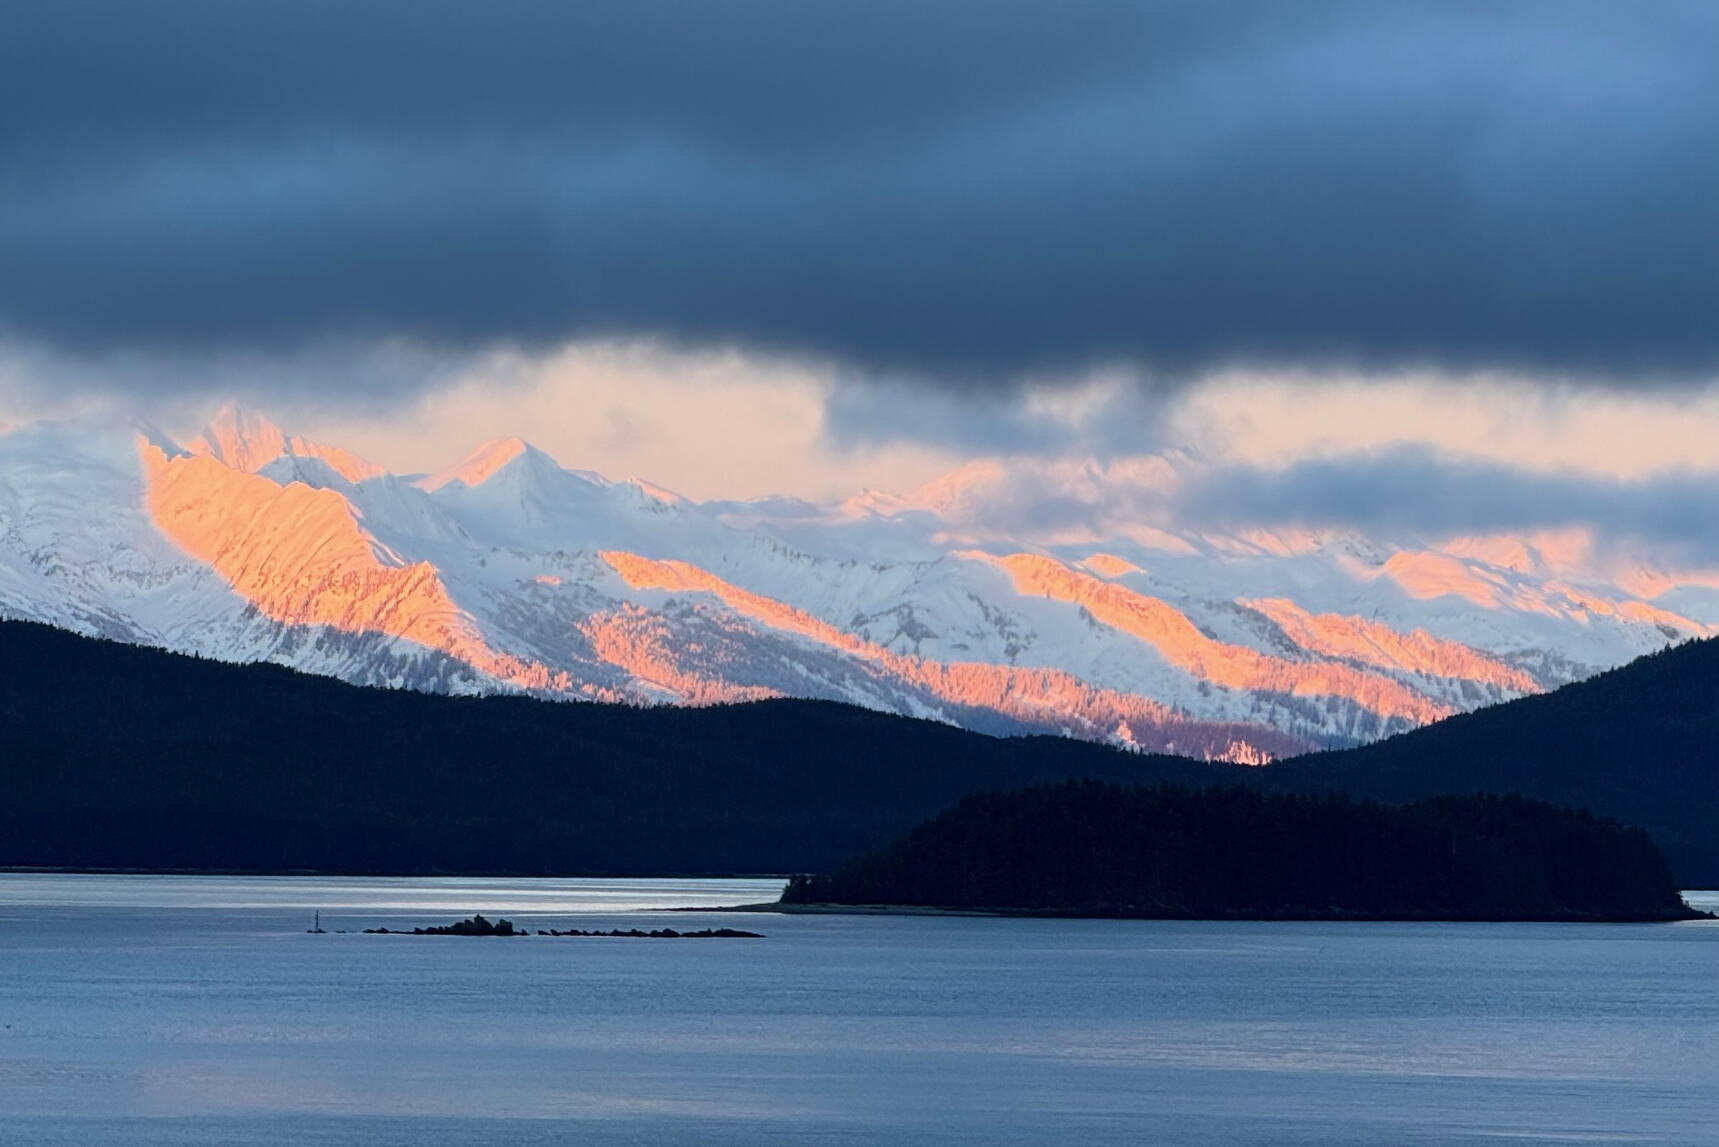 Photo by Denise Carroll
Sunrise on the Chilkat Range on Jan. 6.